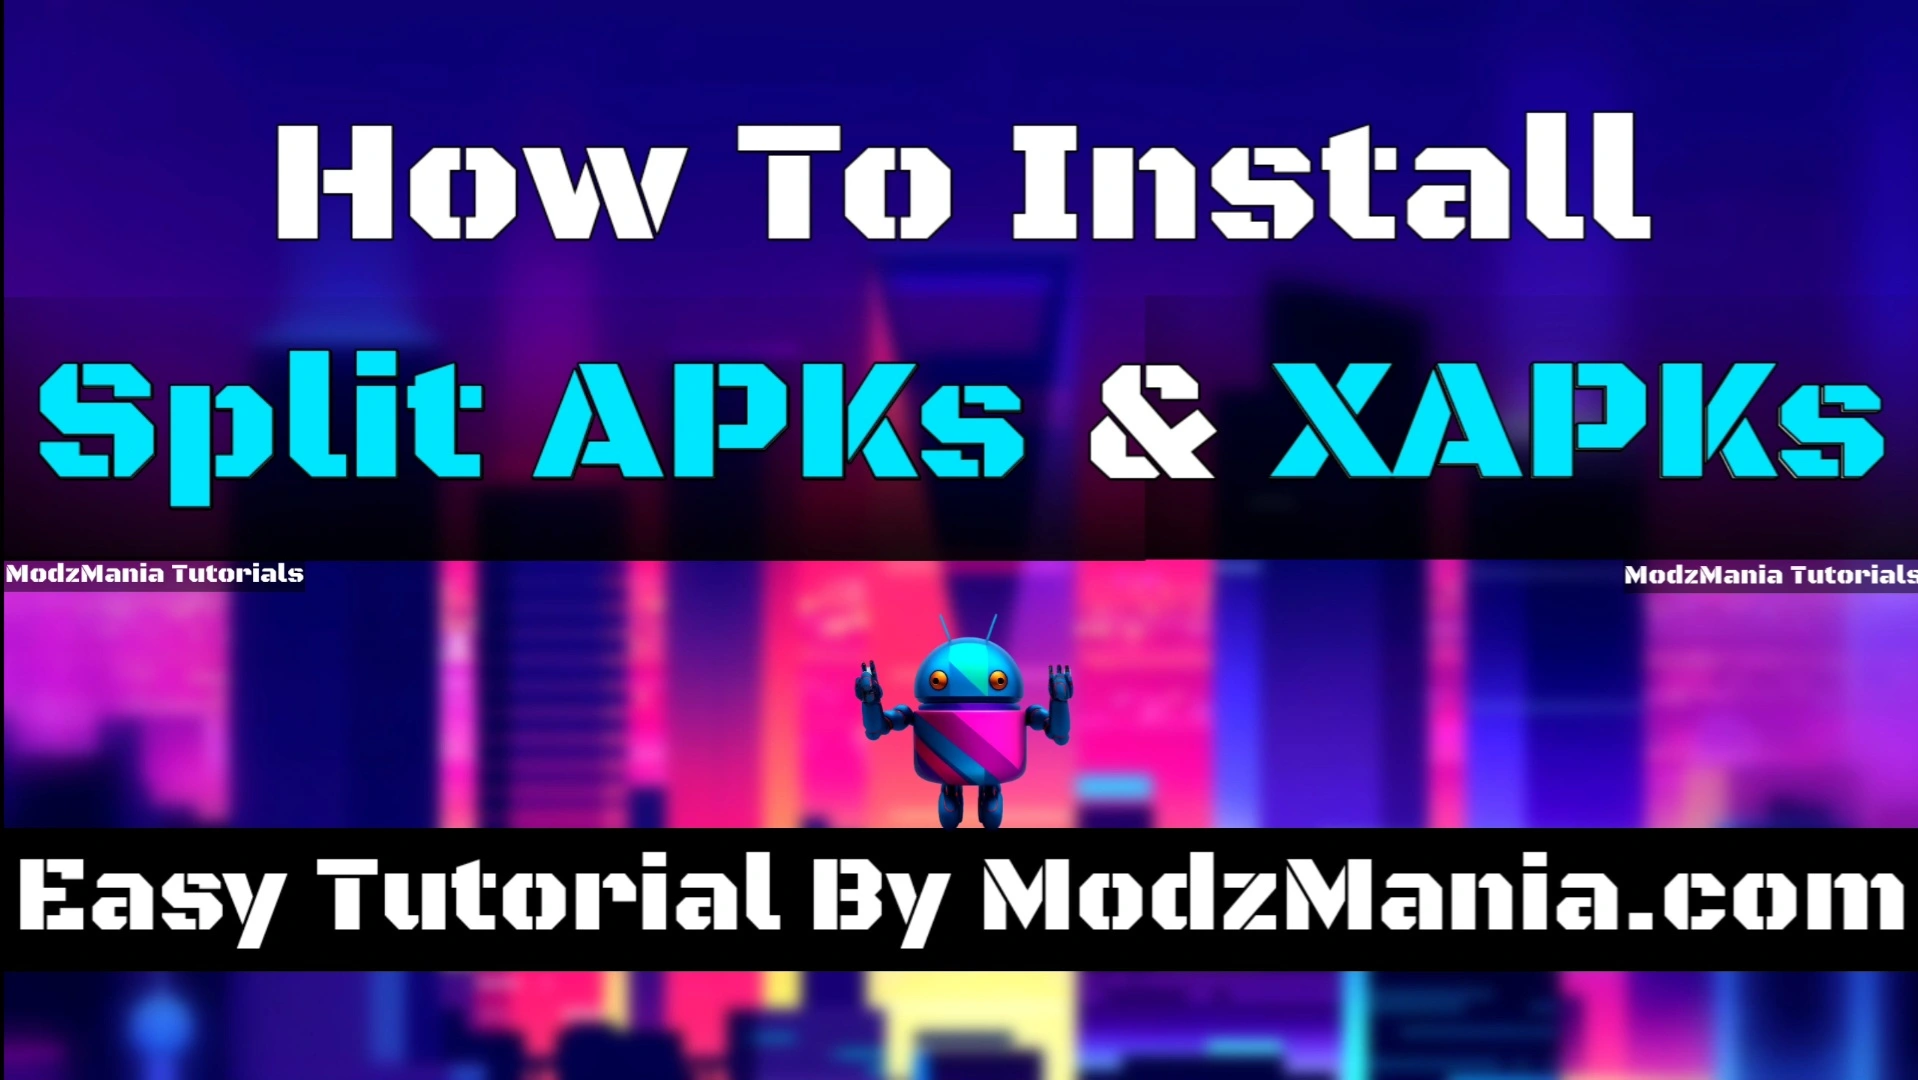 How To Install Split APKs & XAPKs On Android (FULL TUTORIAL)